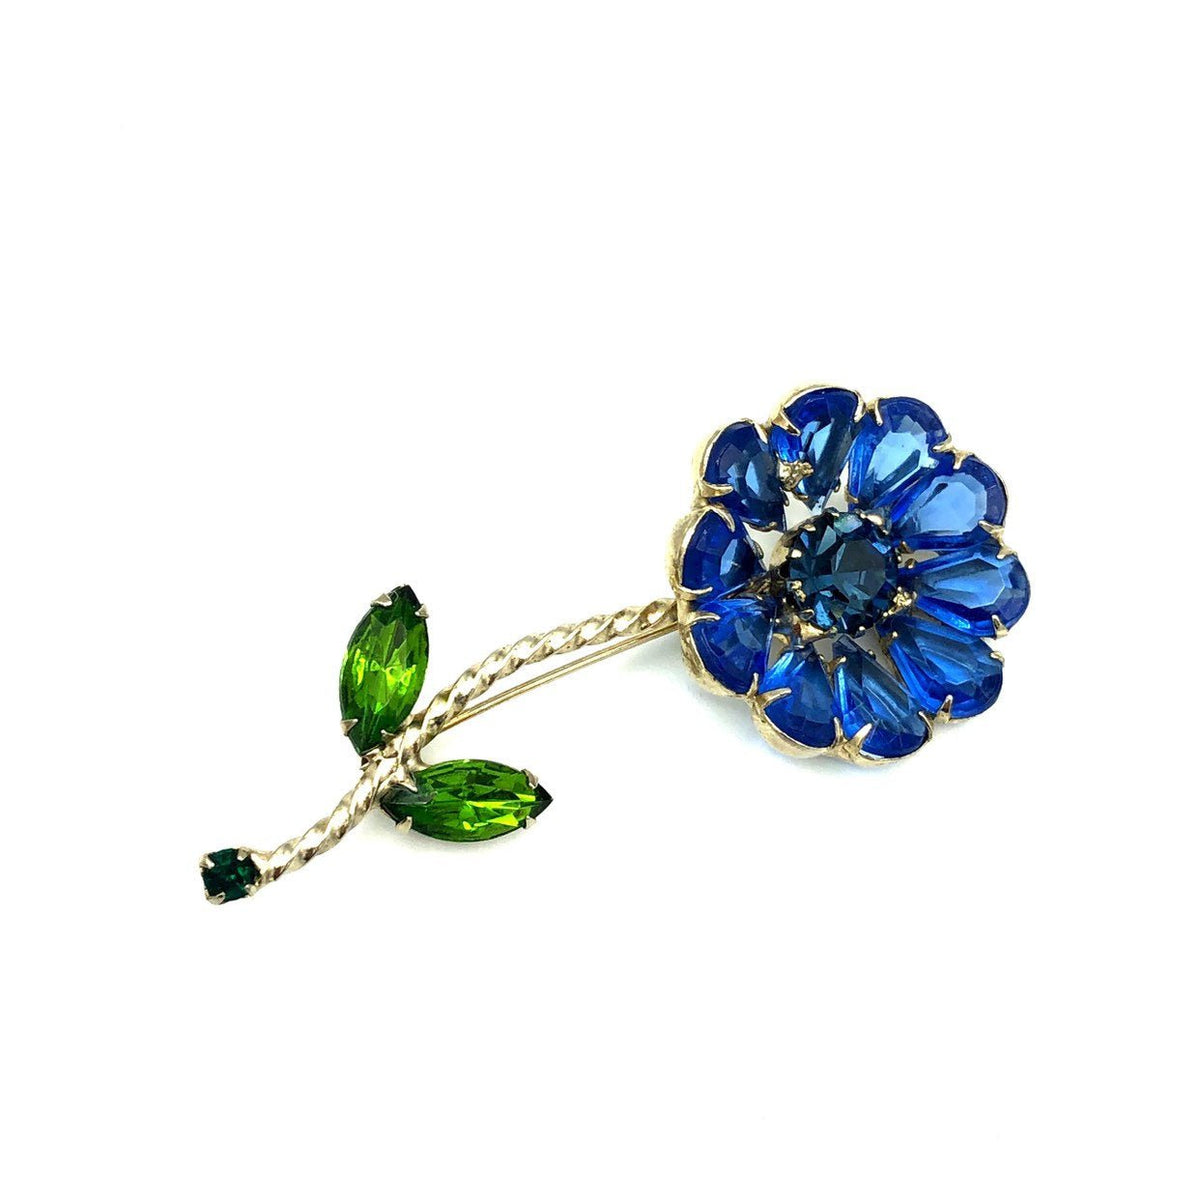 Large Blue Rhinestone Long Stem Flower Brooch - 24 Wishes Vintage Jewelry